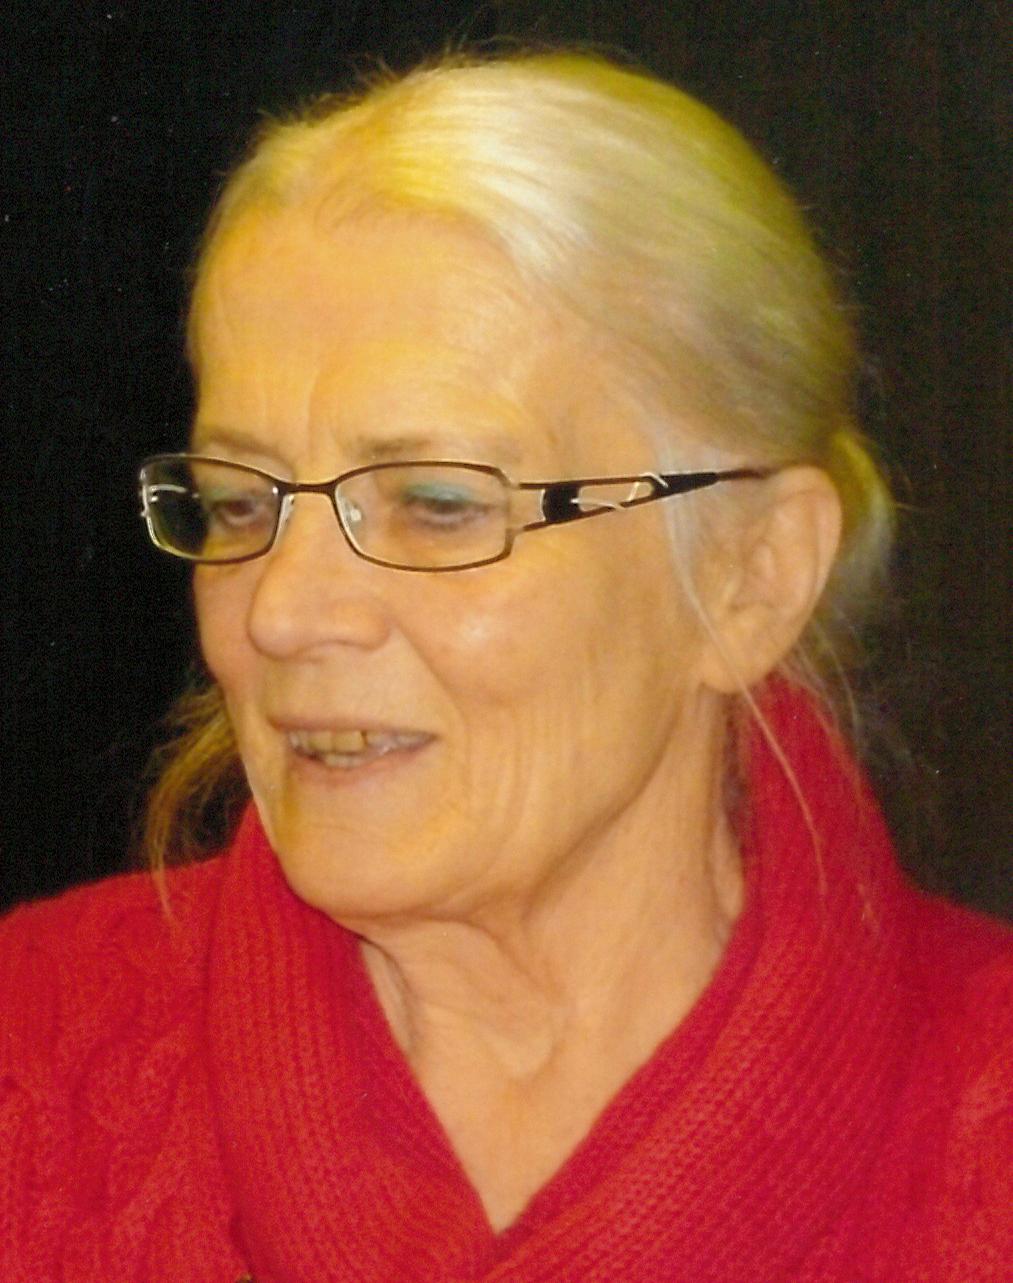 Agnes Verthé